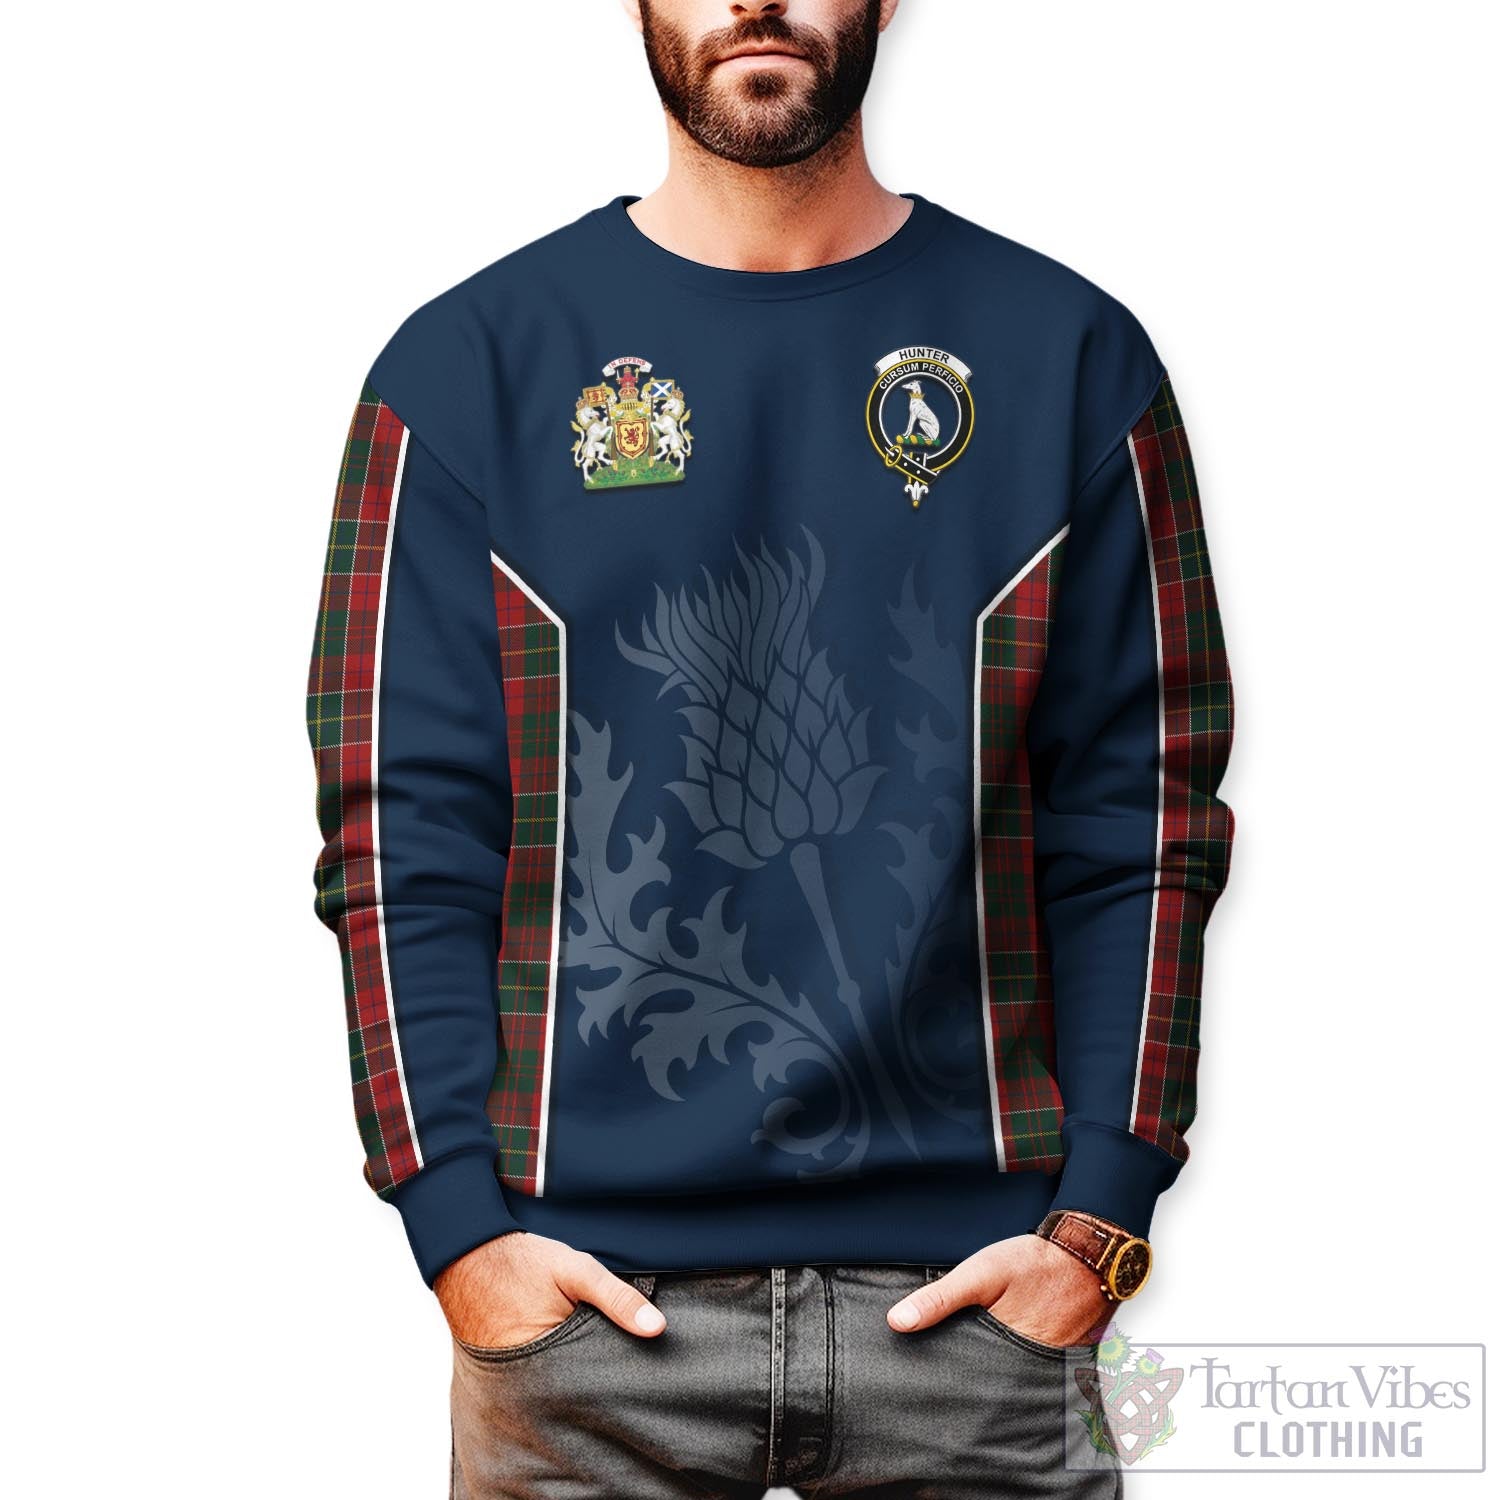 Tartan Vibes Clothing Hunter USA Tartan Sweatshirt with Family Crest and Scottish Thistle Vibes Sport Style